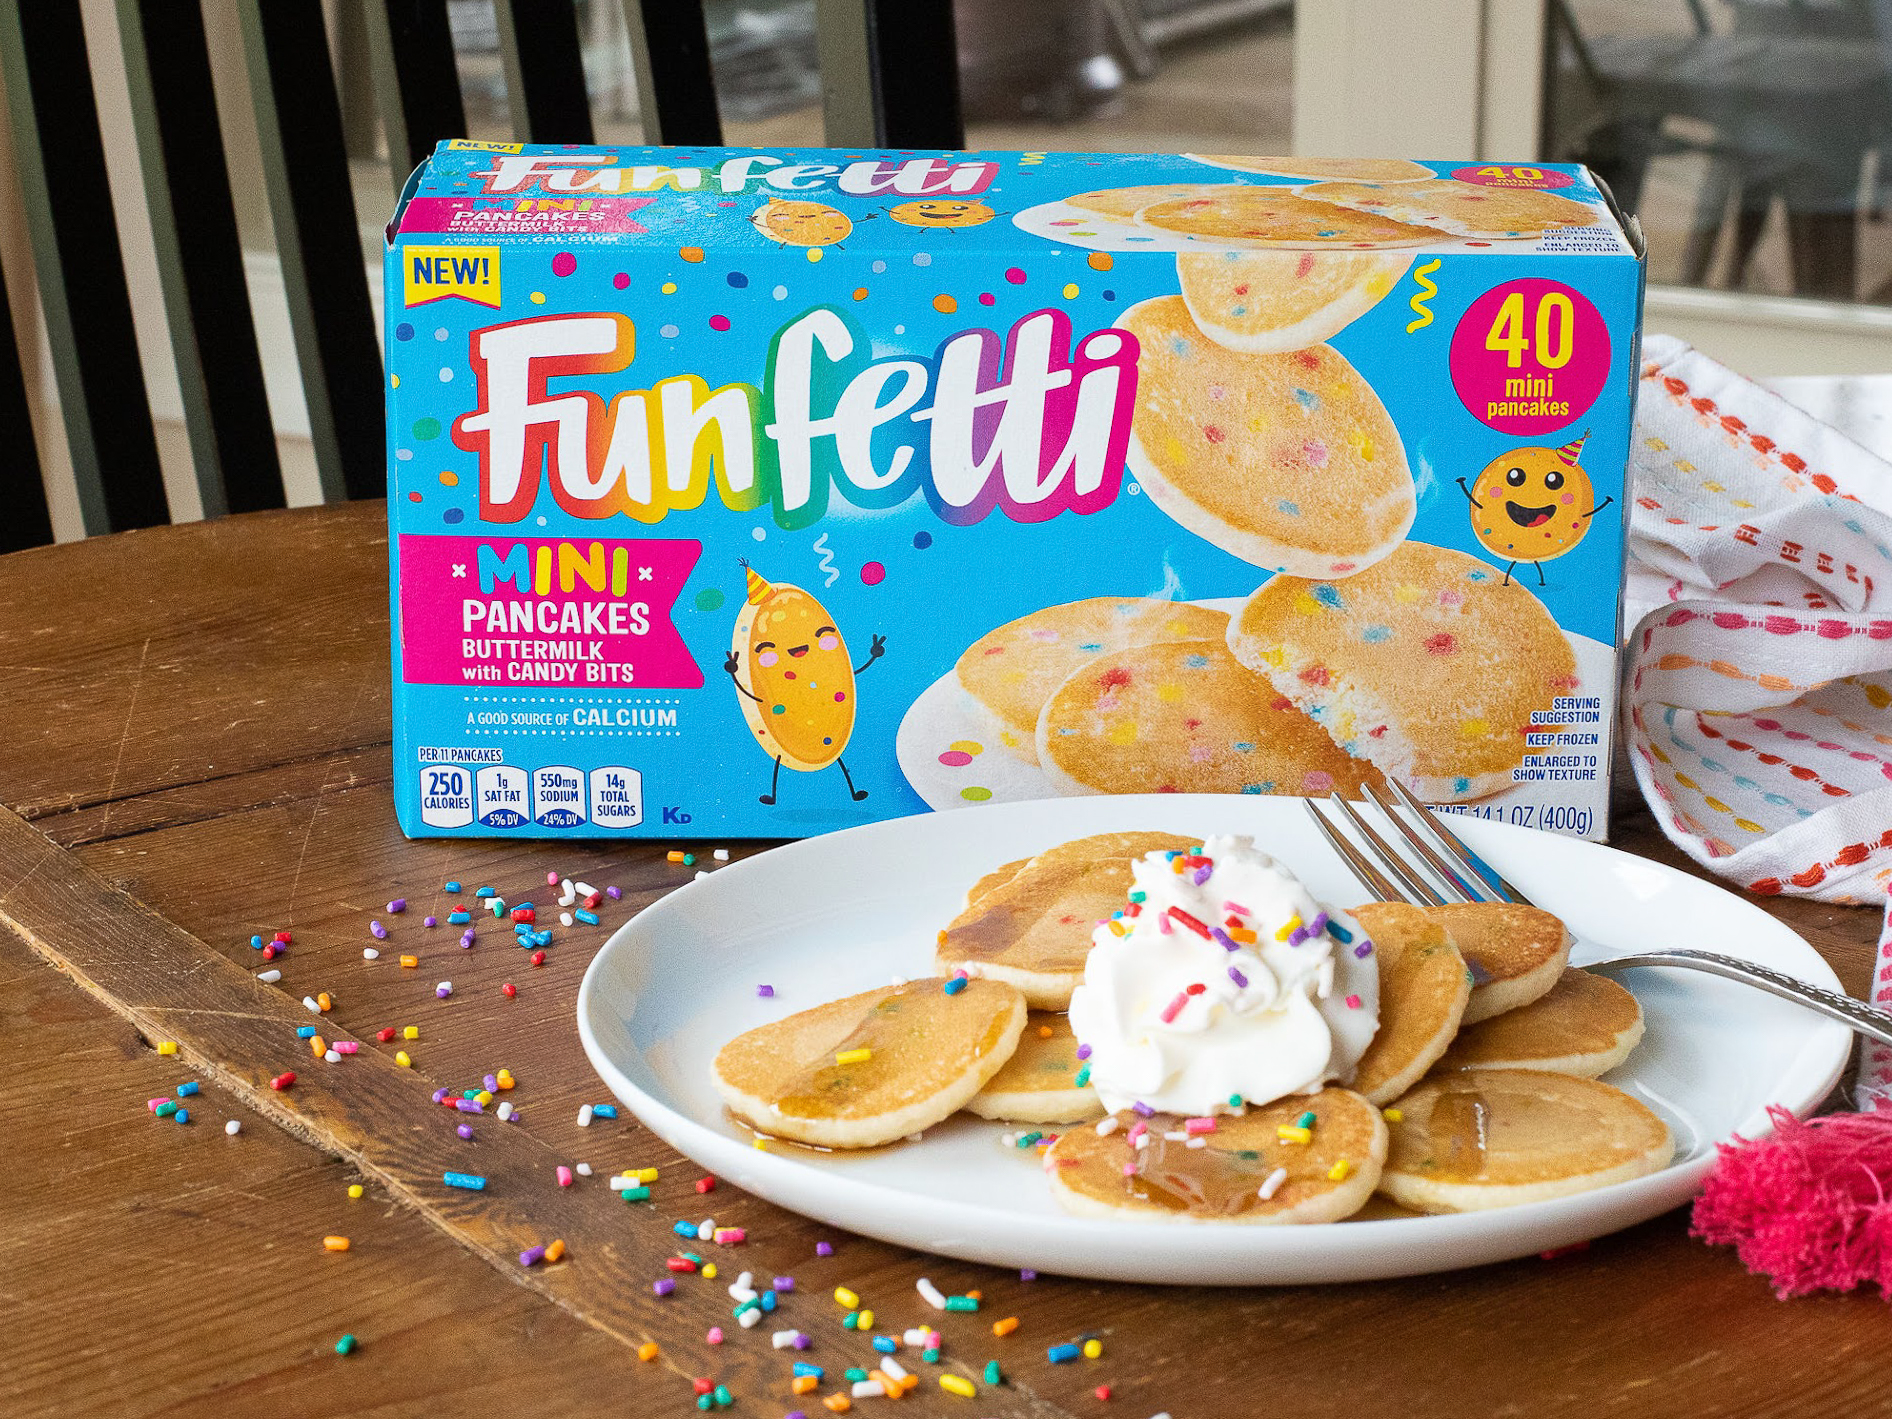 Pick Up Funfetti Frozen Mini Pancakes For As Low As $1.89 Per Box At Kroger